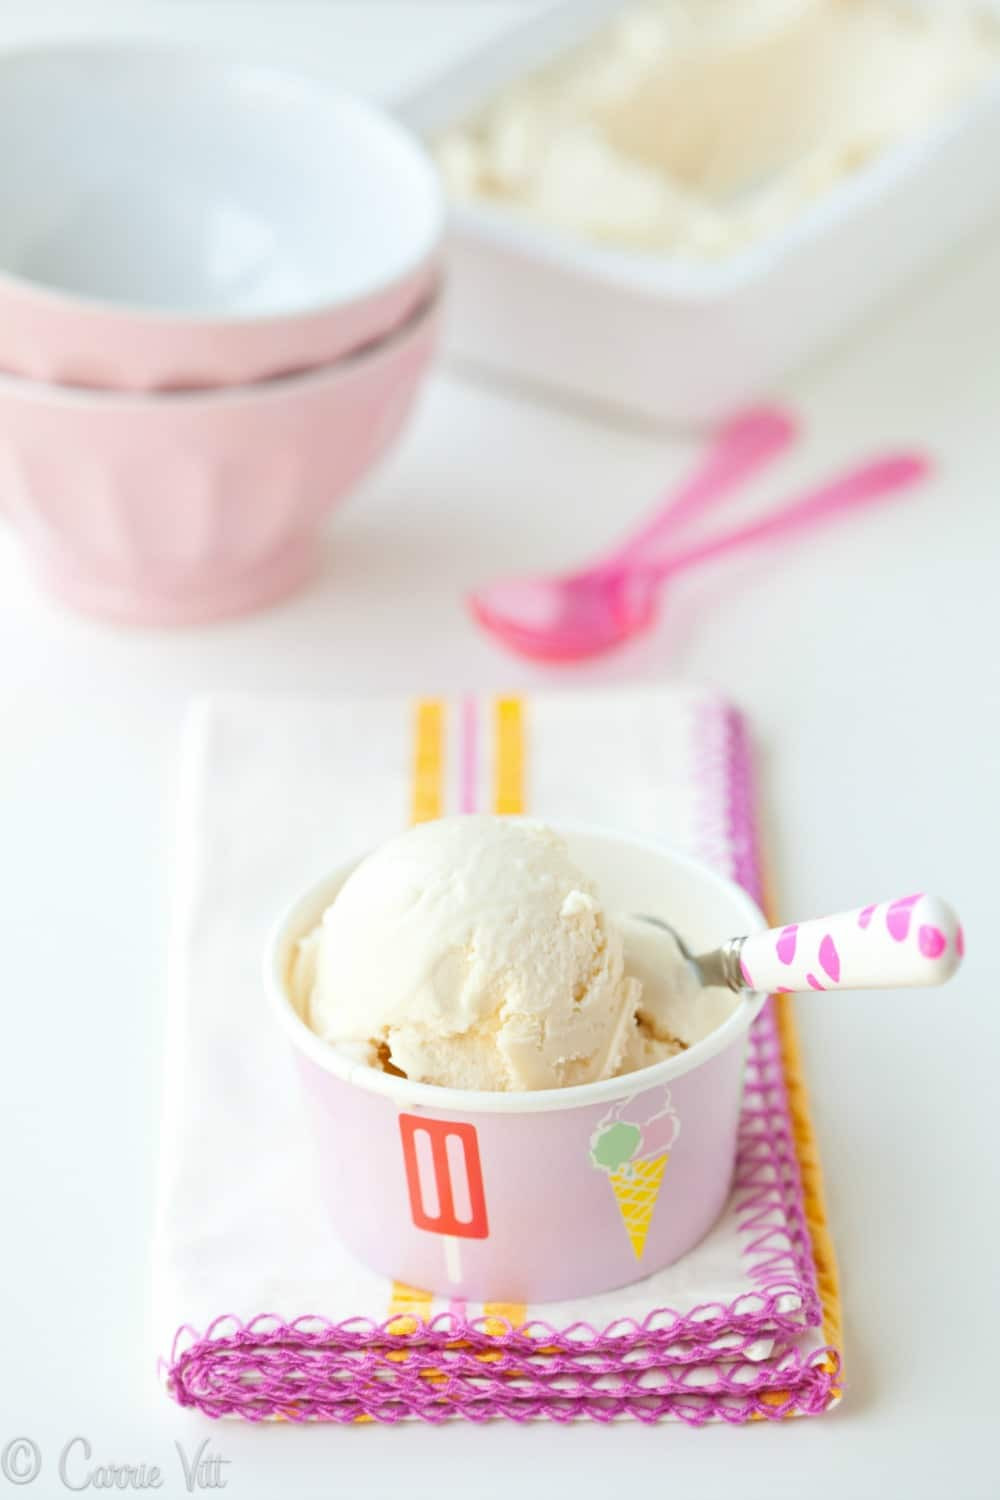 Best ideas about DIY Frozen Yogurt
. Save or Pin Frozen Yogurt Recipe Deliciously Organic Now.